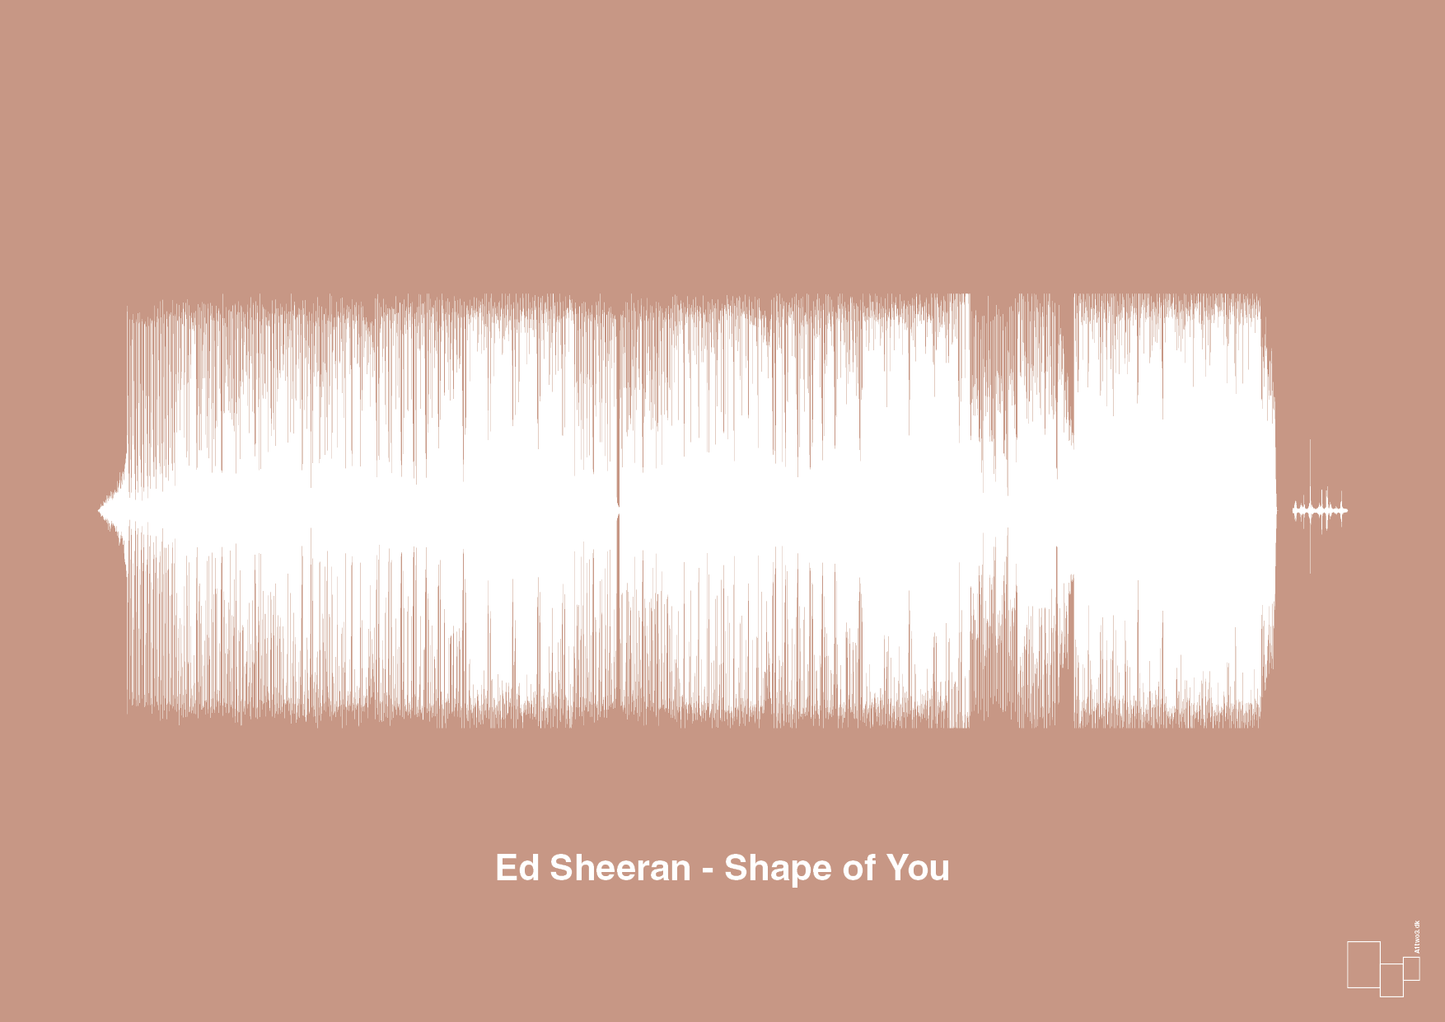 ed sheeran - shape of you - Plakat med Musik i Powder